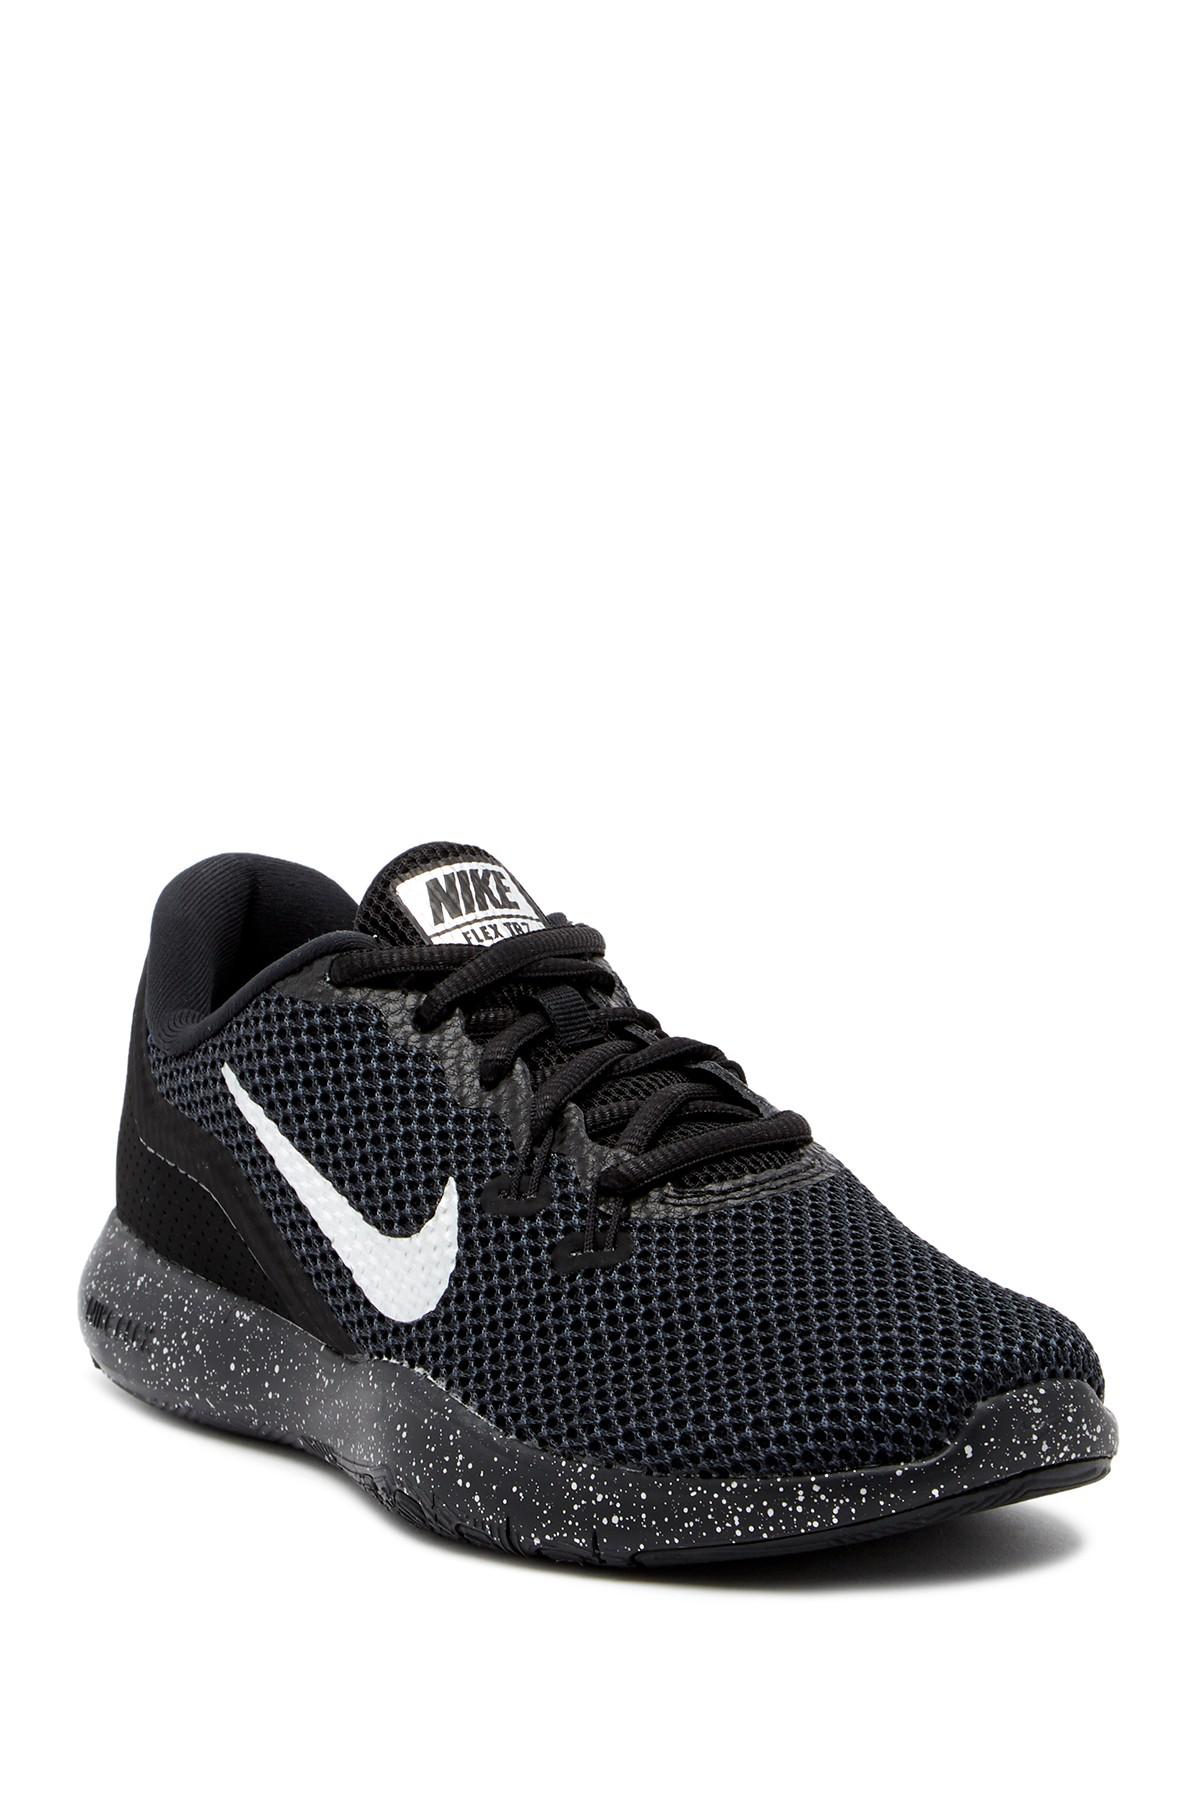 Nike Flex Trainer 7 Prm Running Shoe in Black - Lyst